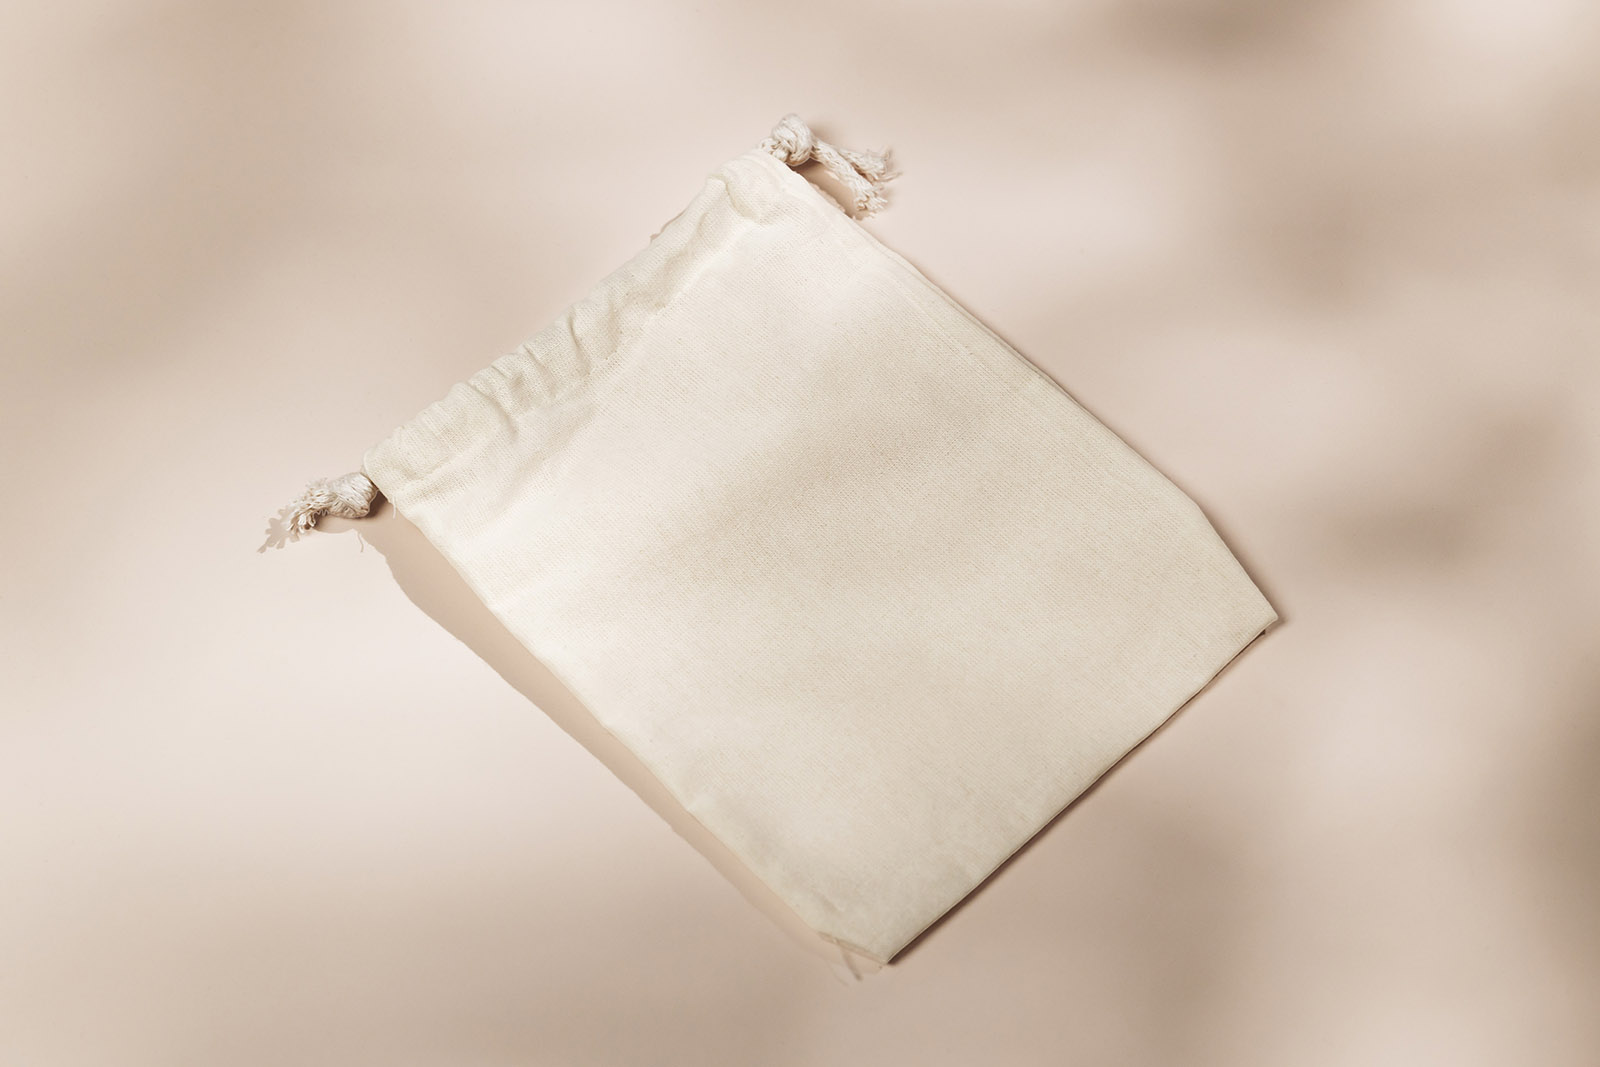 Small linen bag mockup